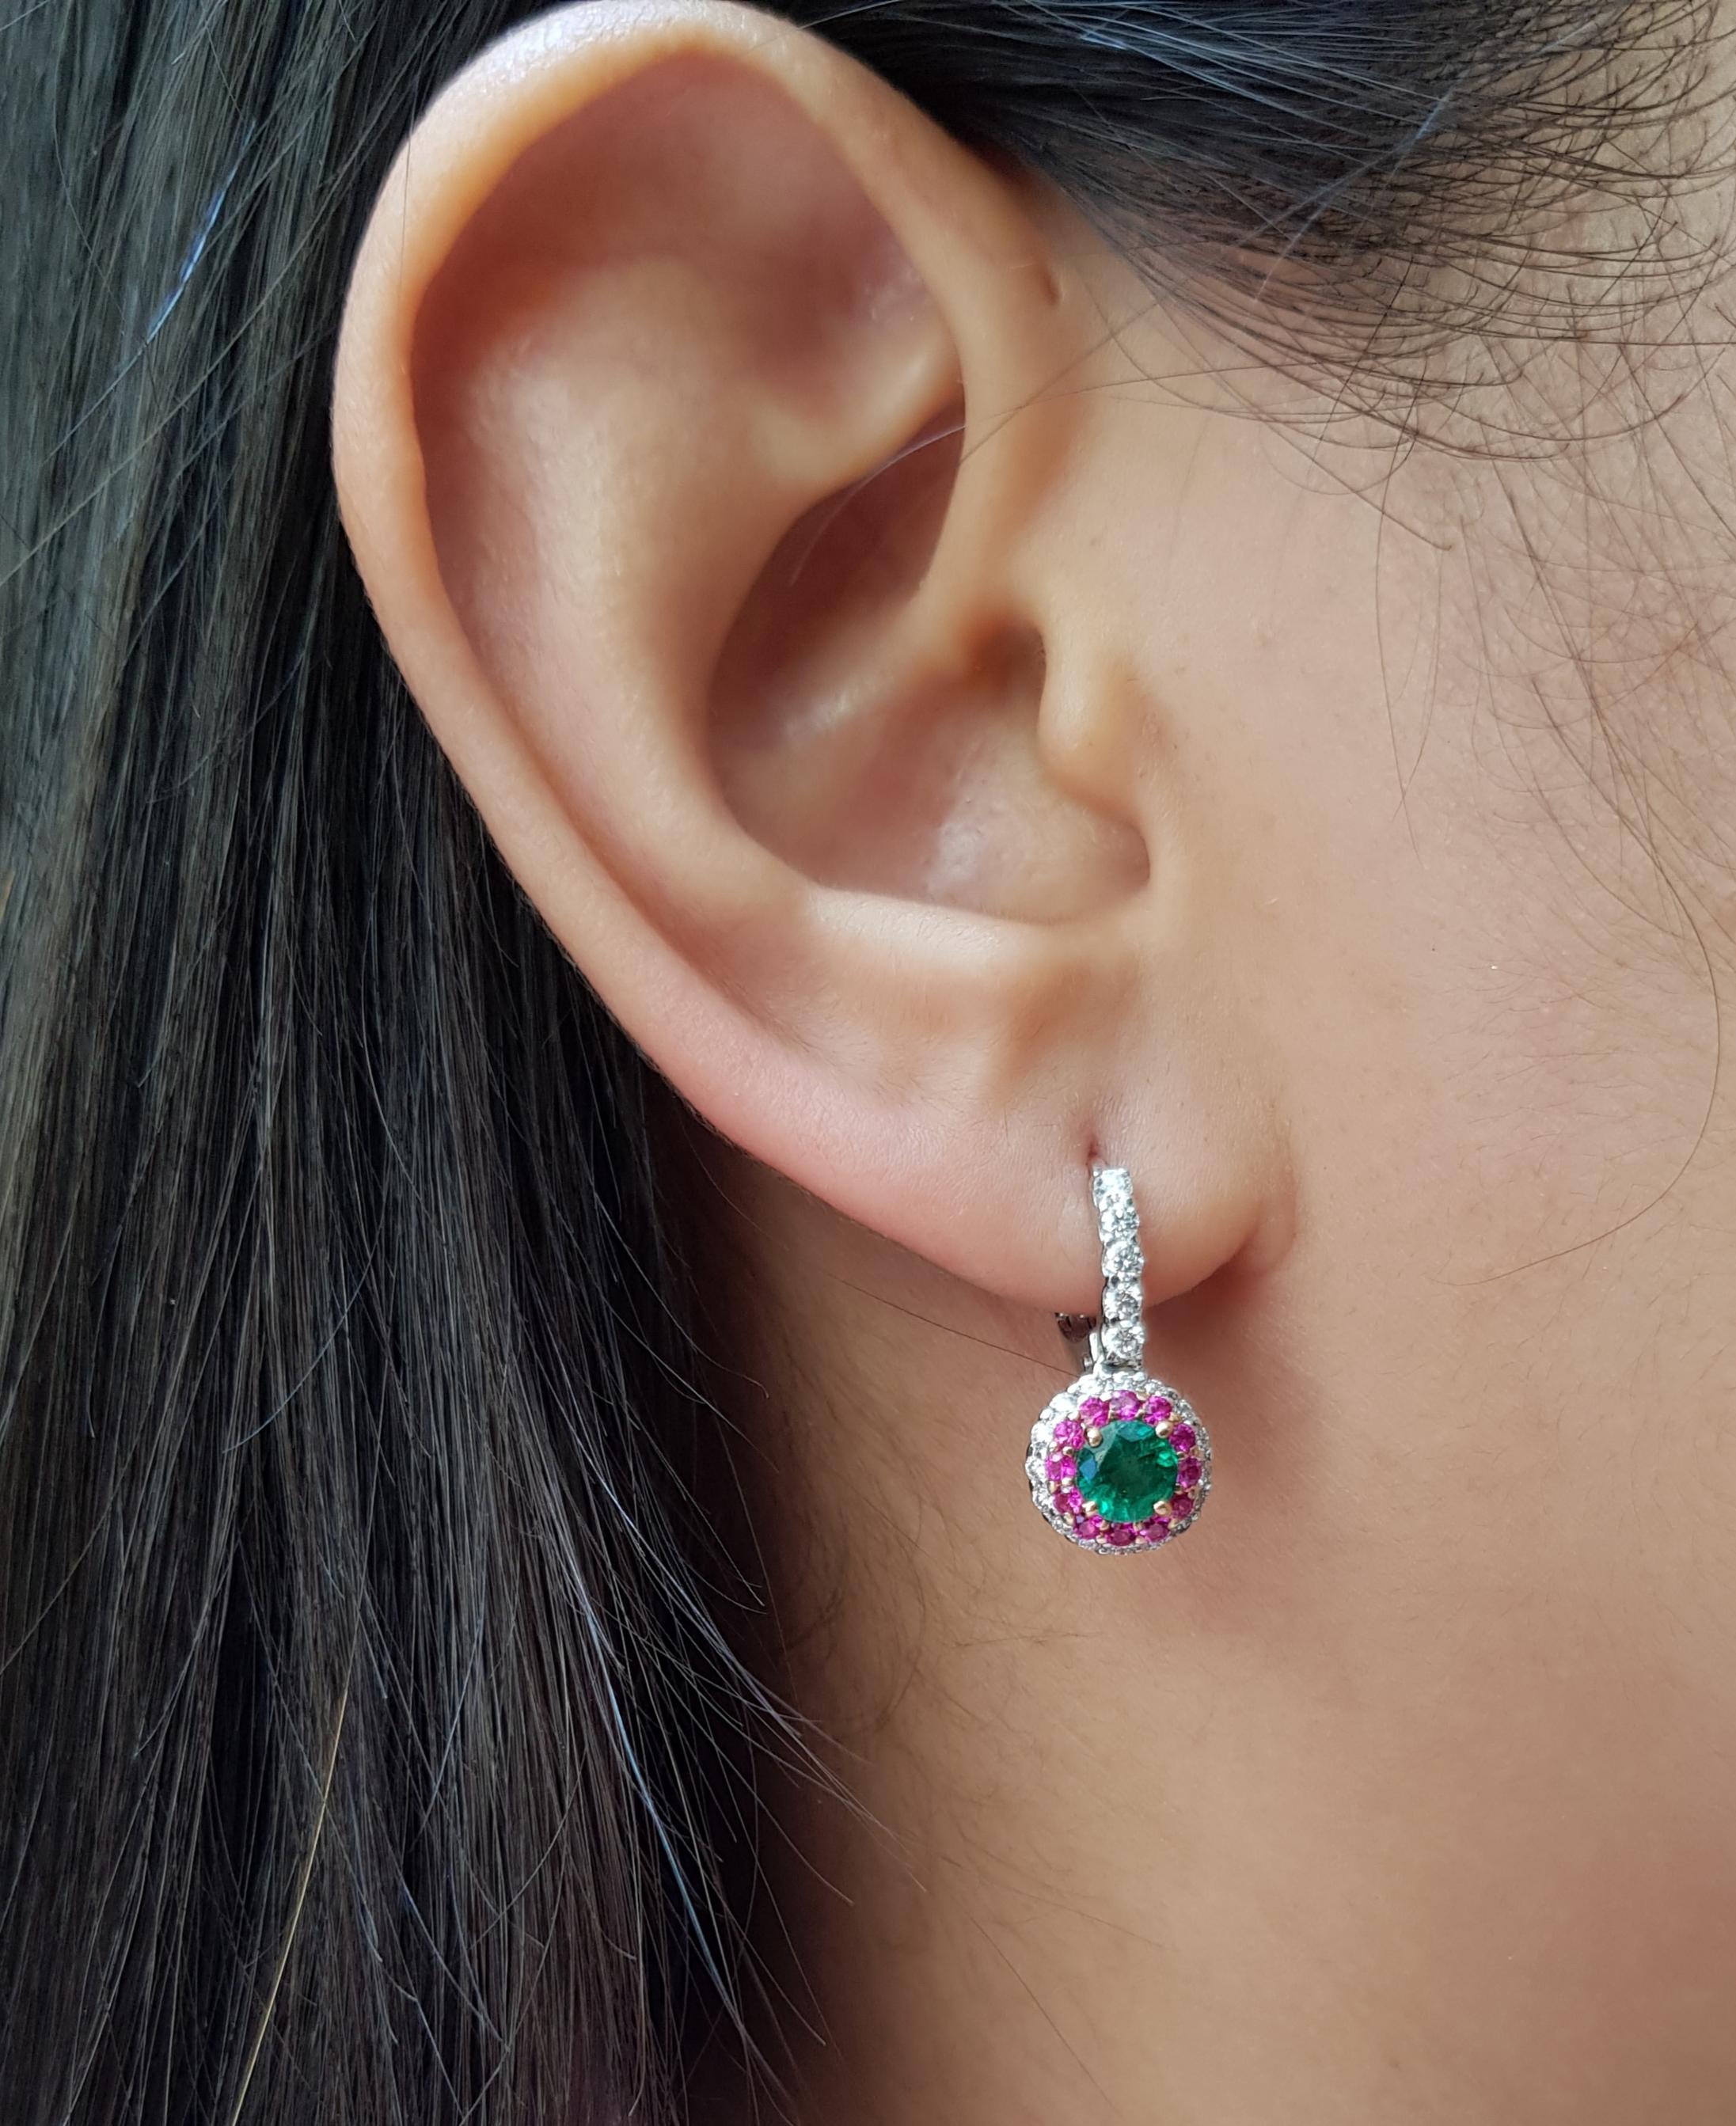 Emerald 0.91 carat with Diamond 0.53 carat and Pink Sapphire 0.38 carat Earrings set in 18 Karat White Gold Settings

Width: 0.9 cm
Length: 2.2 cm 

